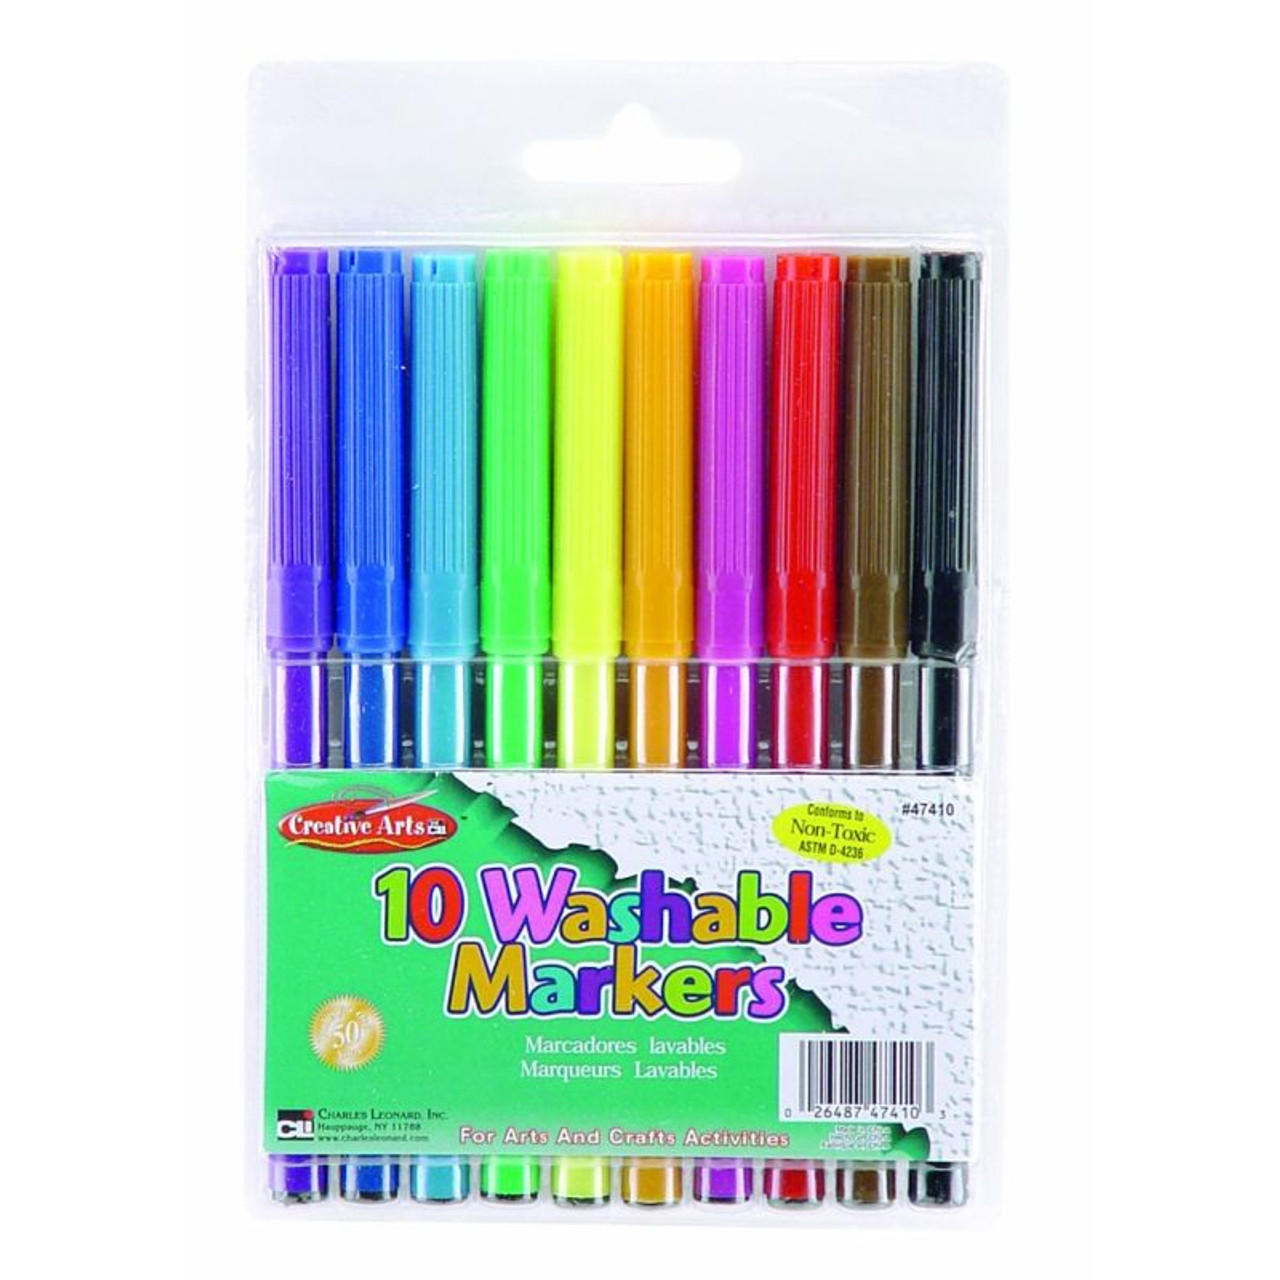 Crayola Super Tips Washable Marker Set of 20 - FLAX art